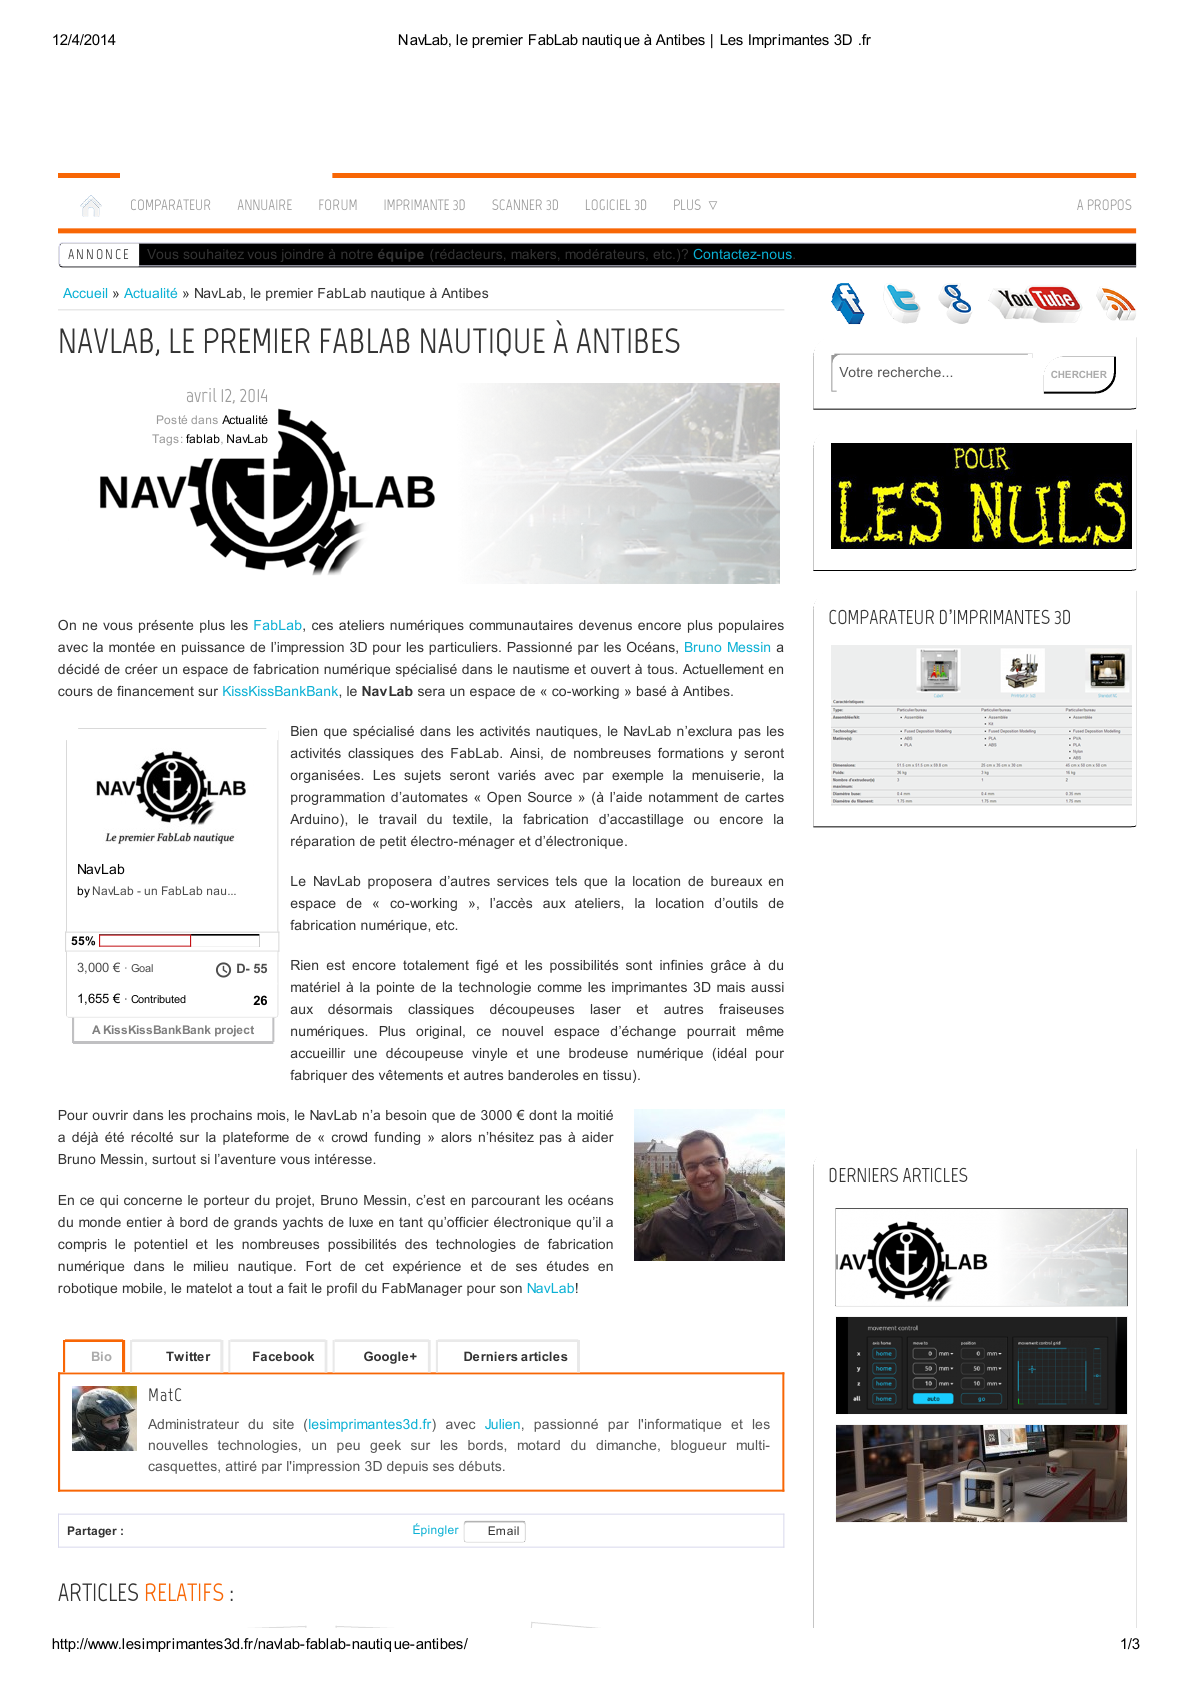 The NavLab in lesimprimantes3d.fr